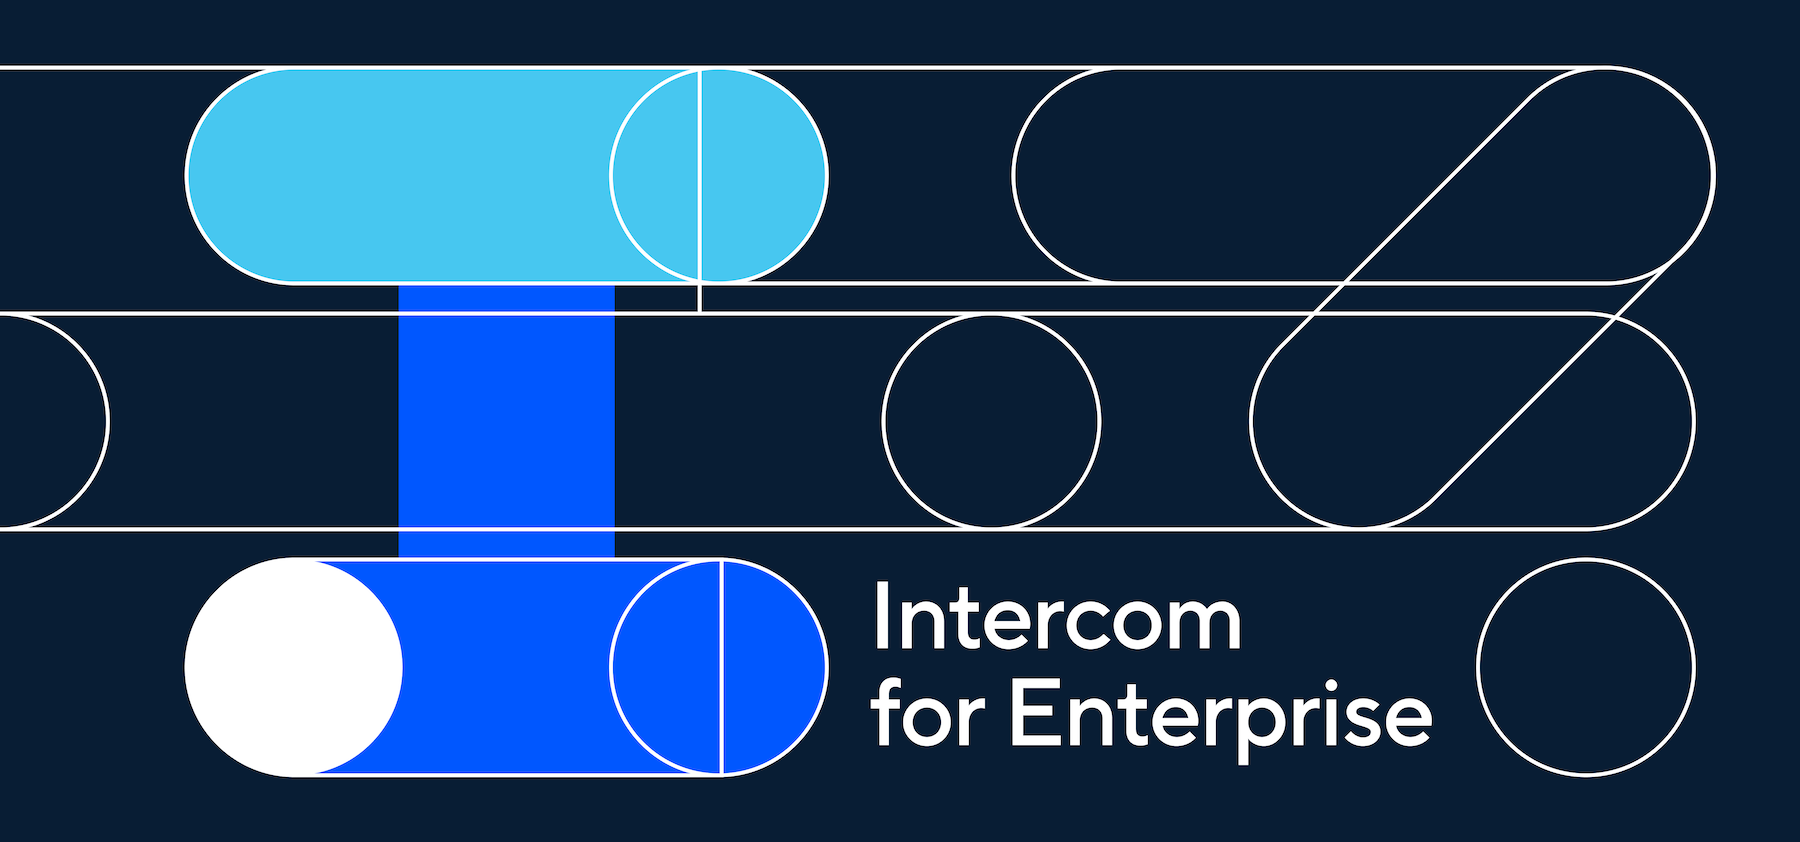 Ensuring Intercom’s interoperability for enterprise customers